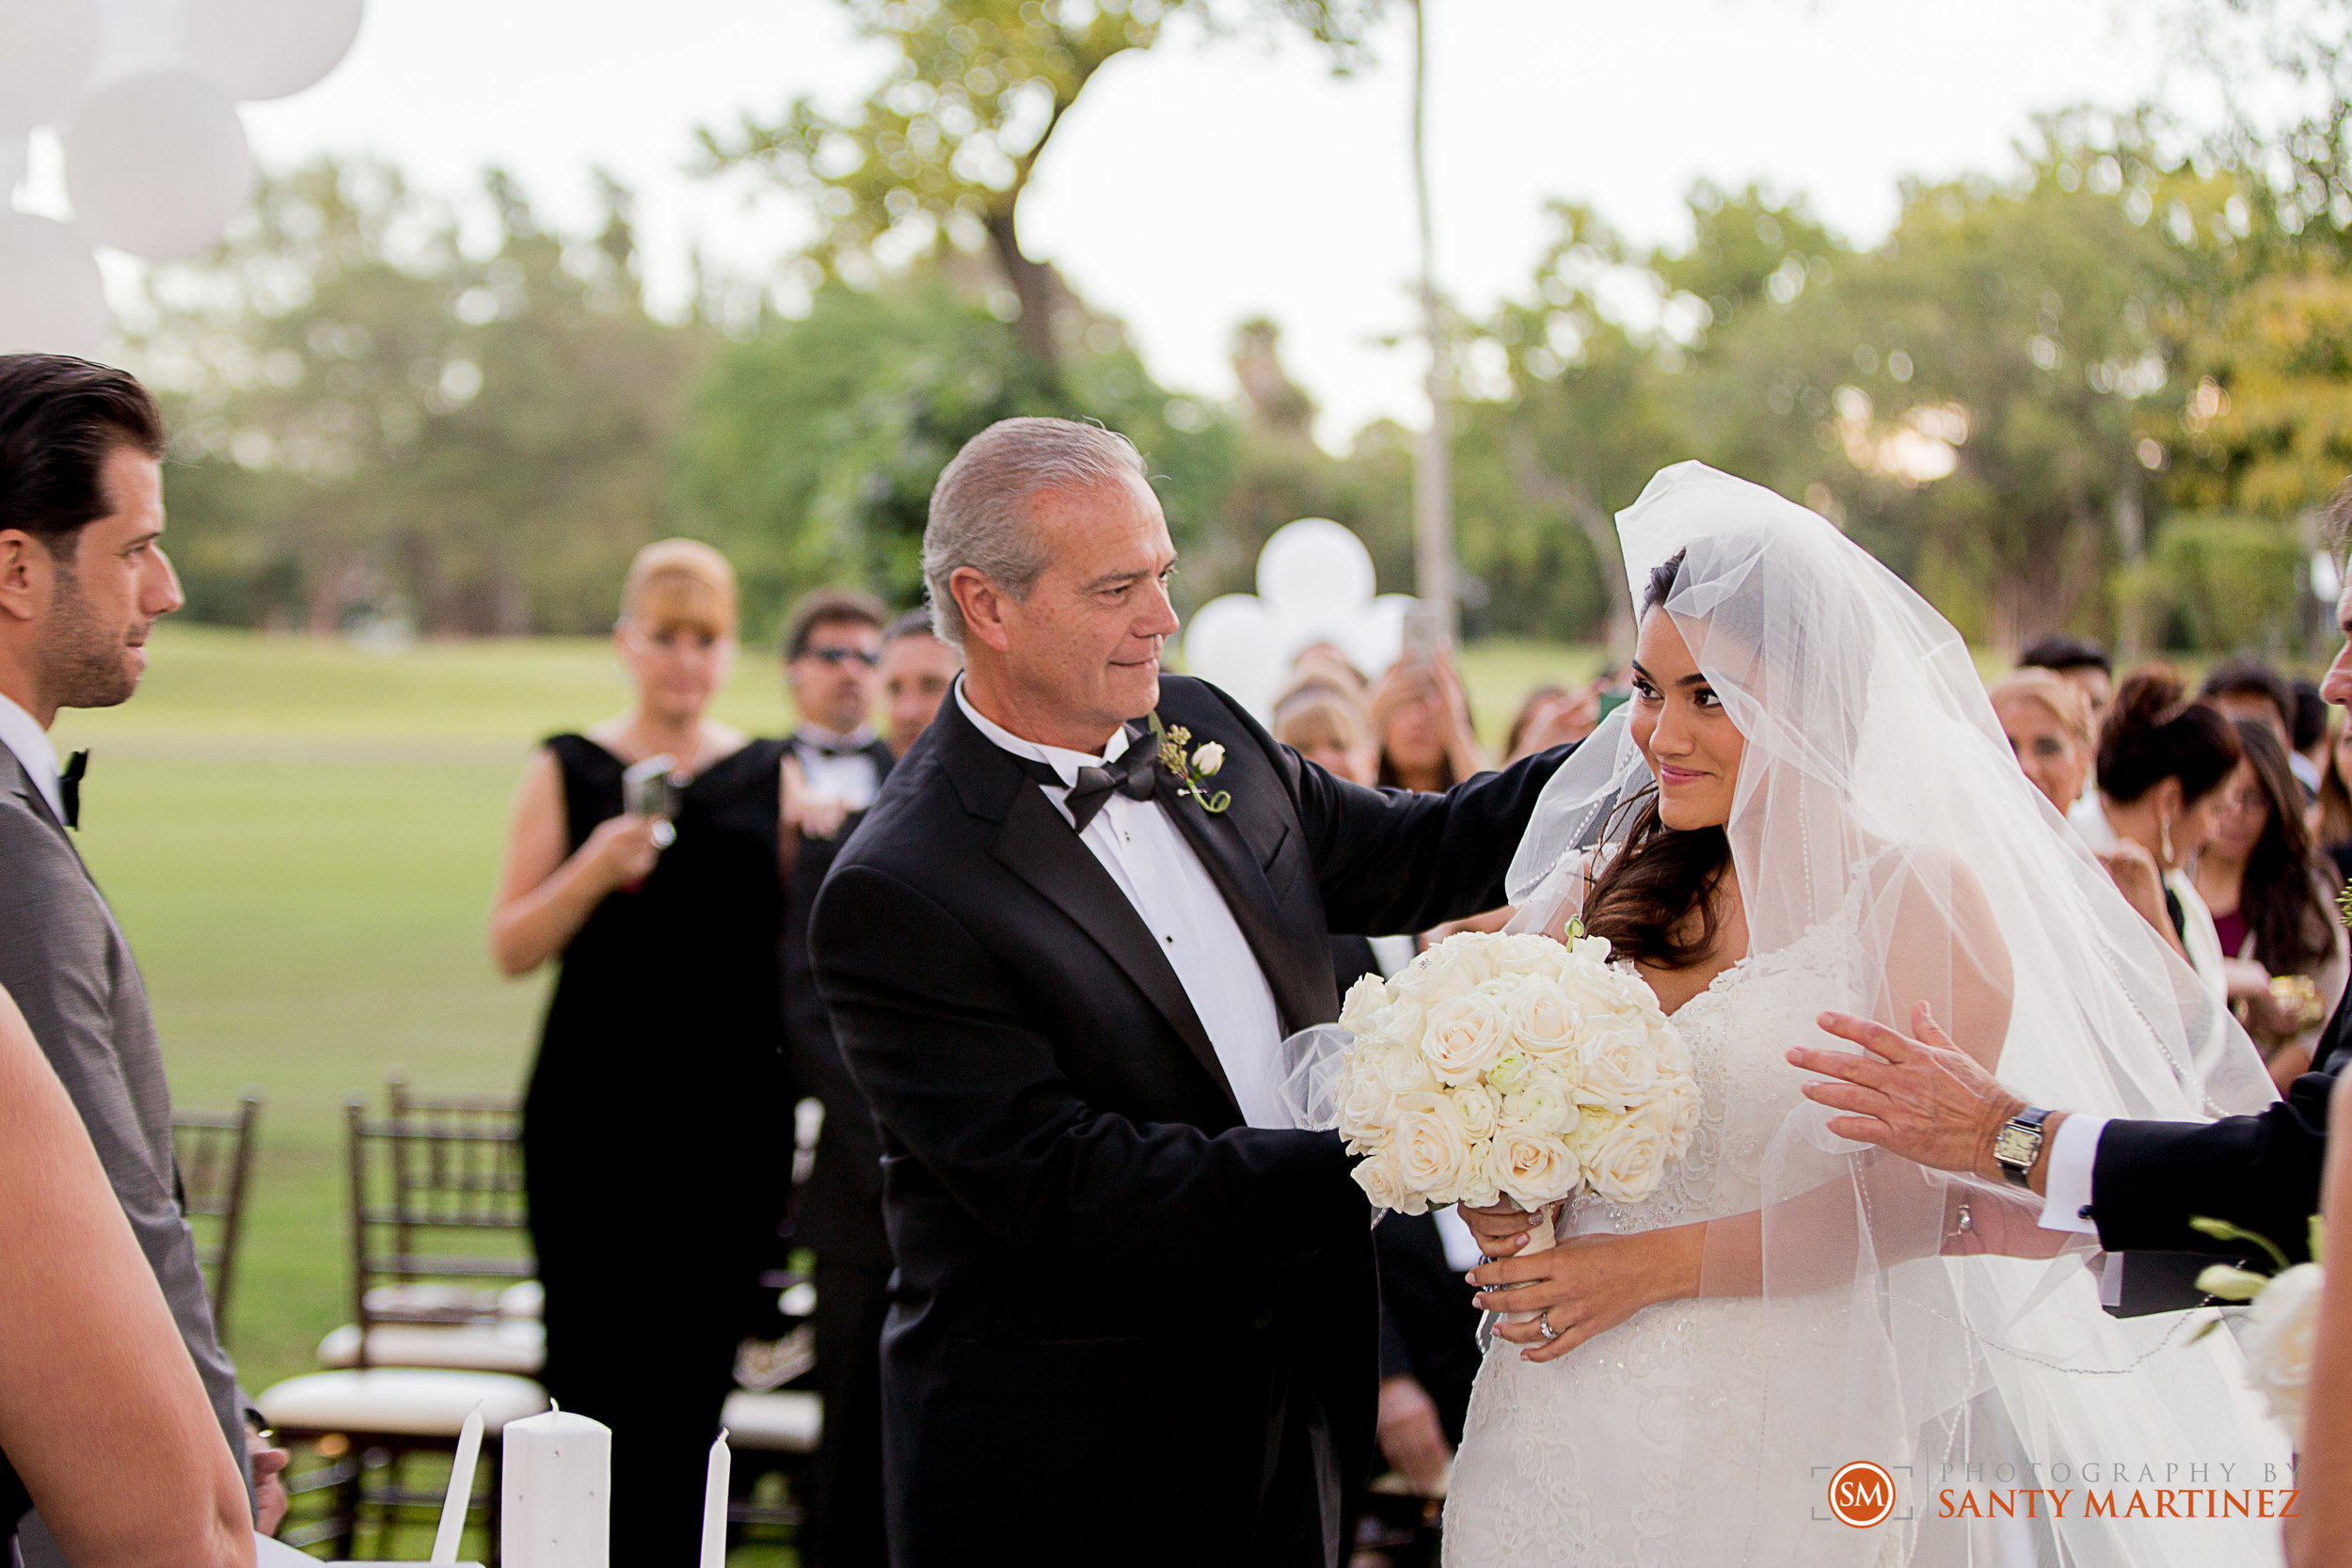 Miami Wedding Photographer - Santy Martinez -10.jpg